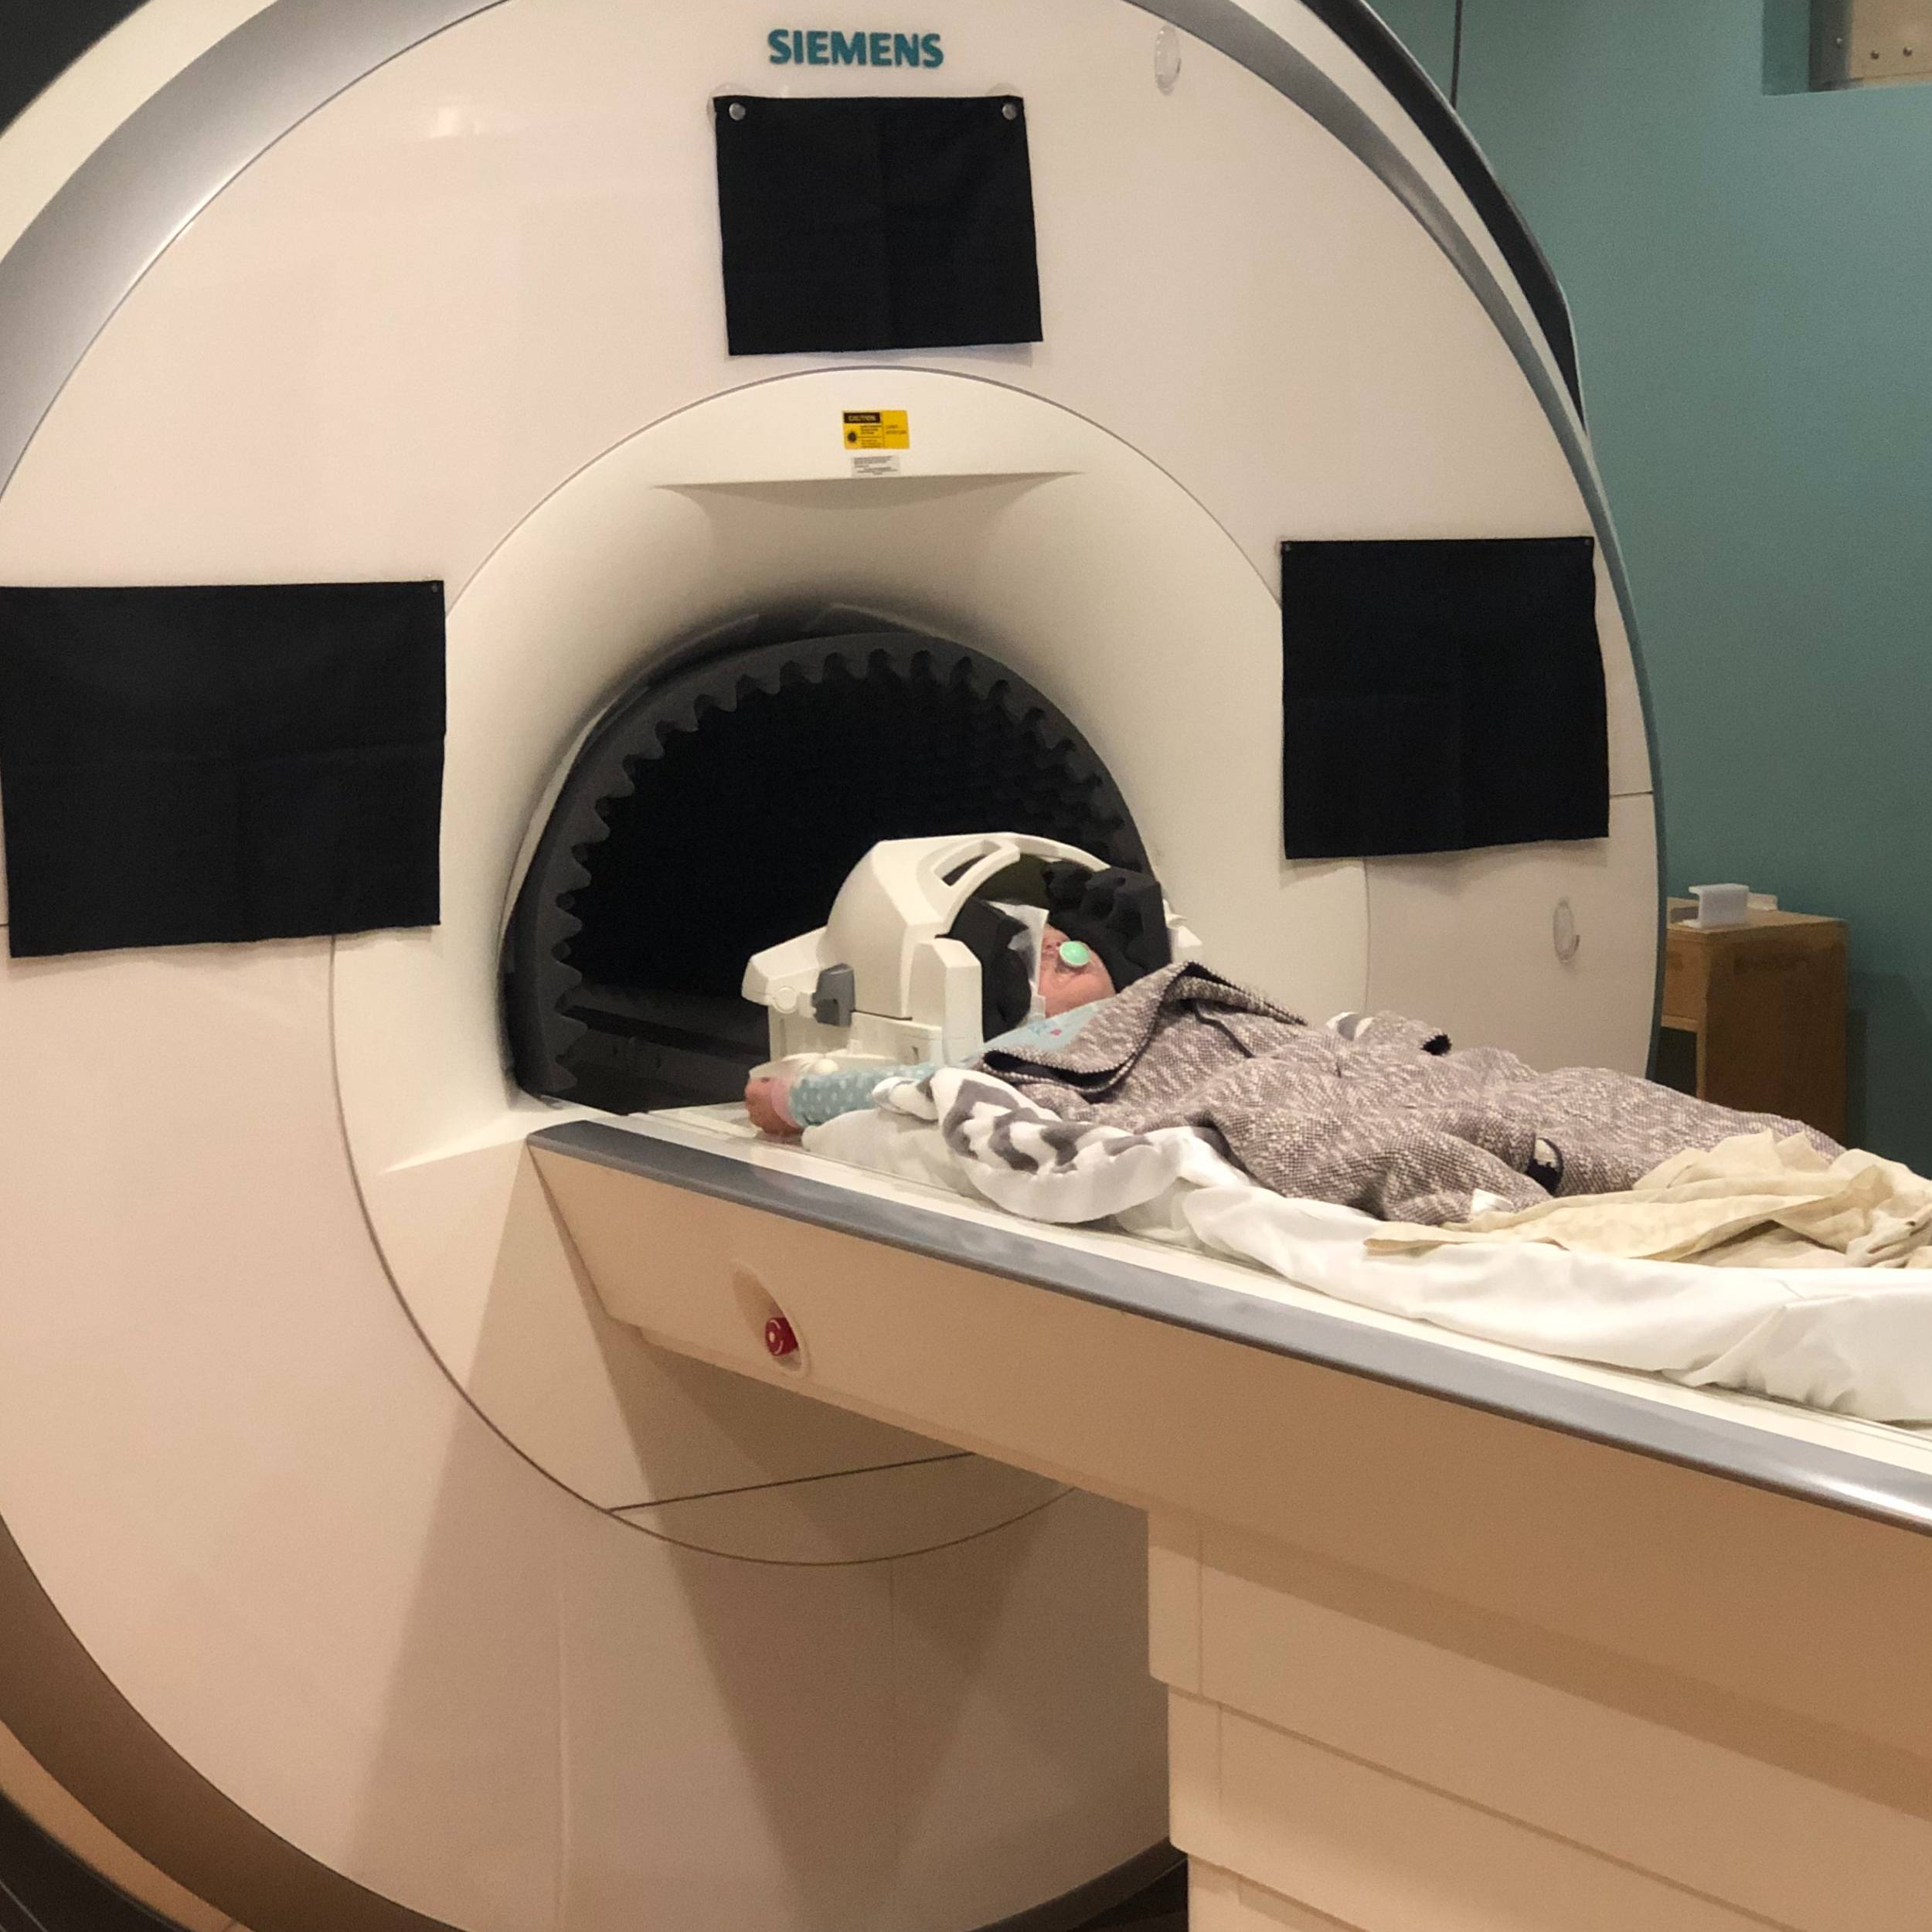 CMV Infant Study MRI Scan